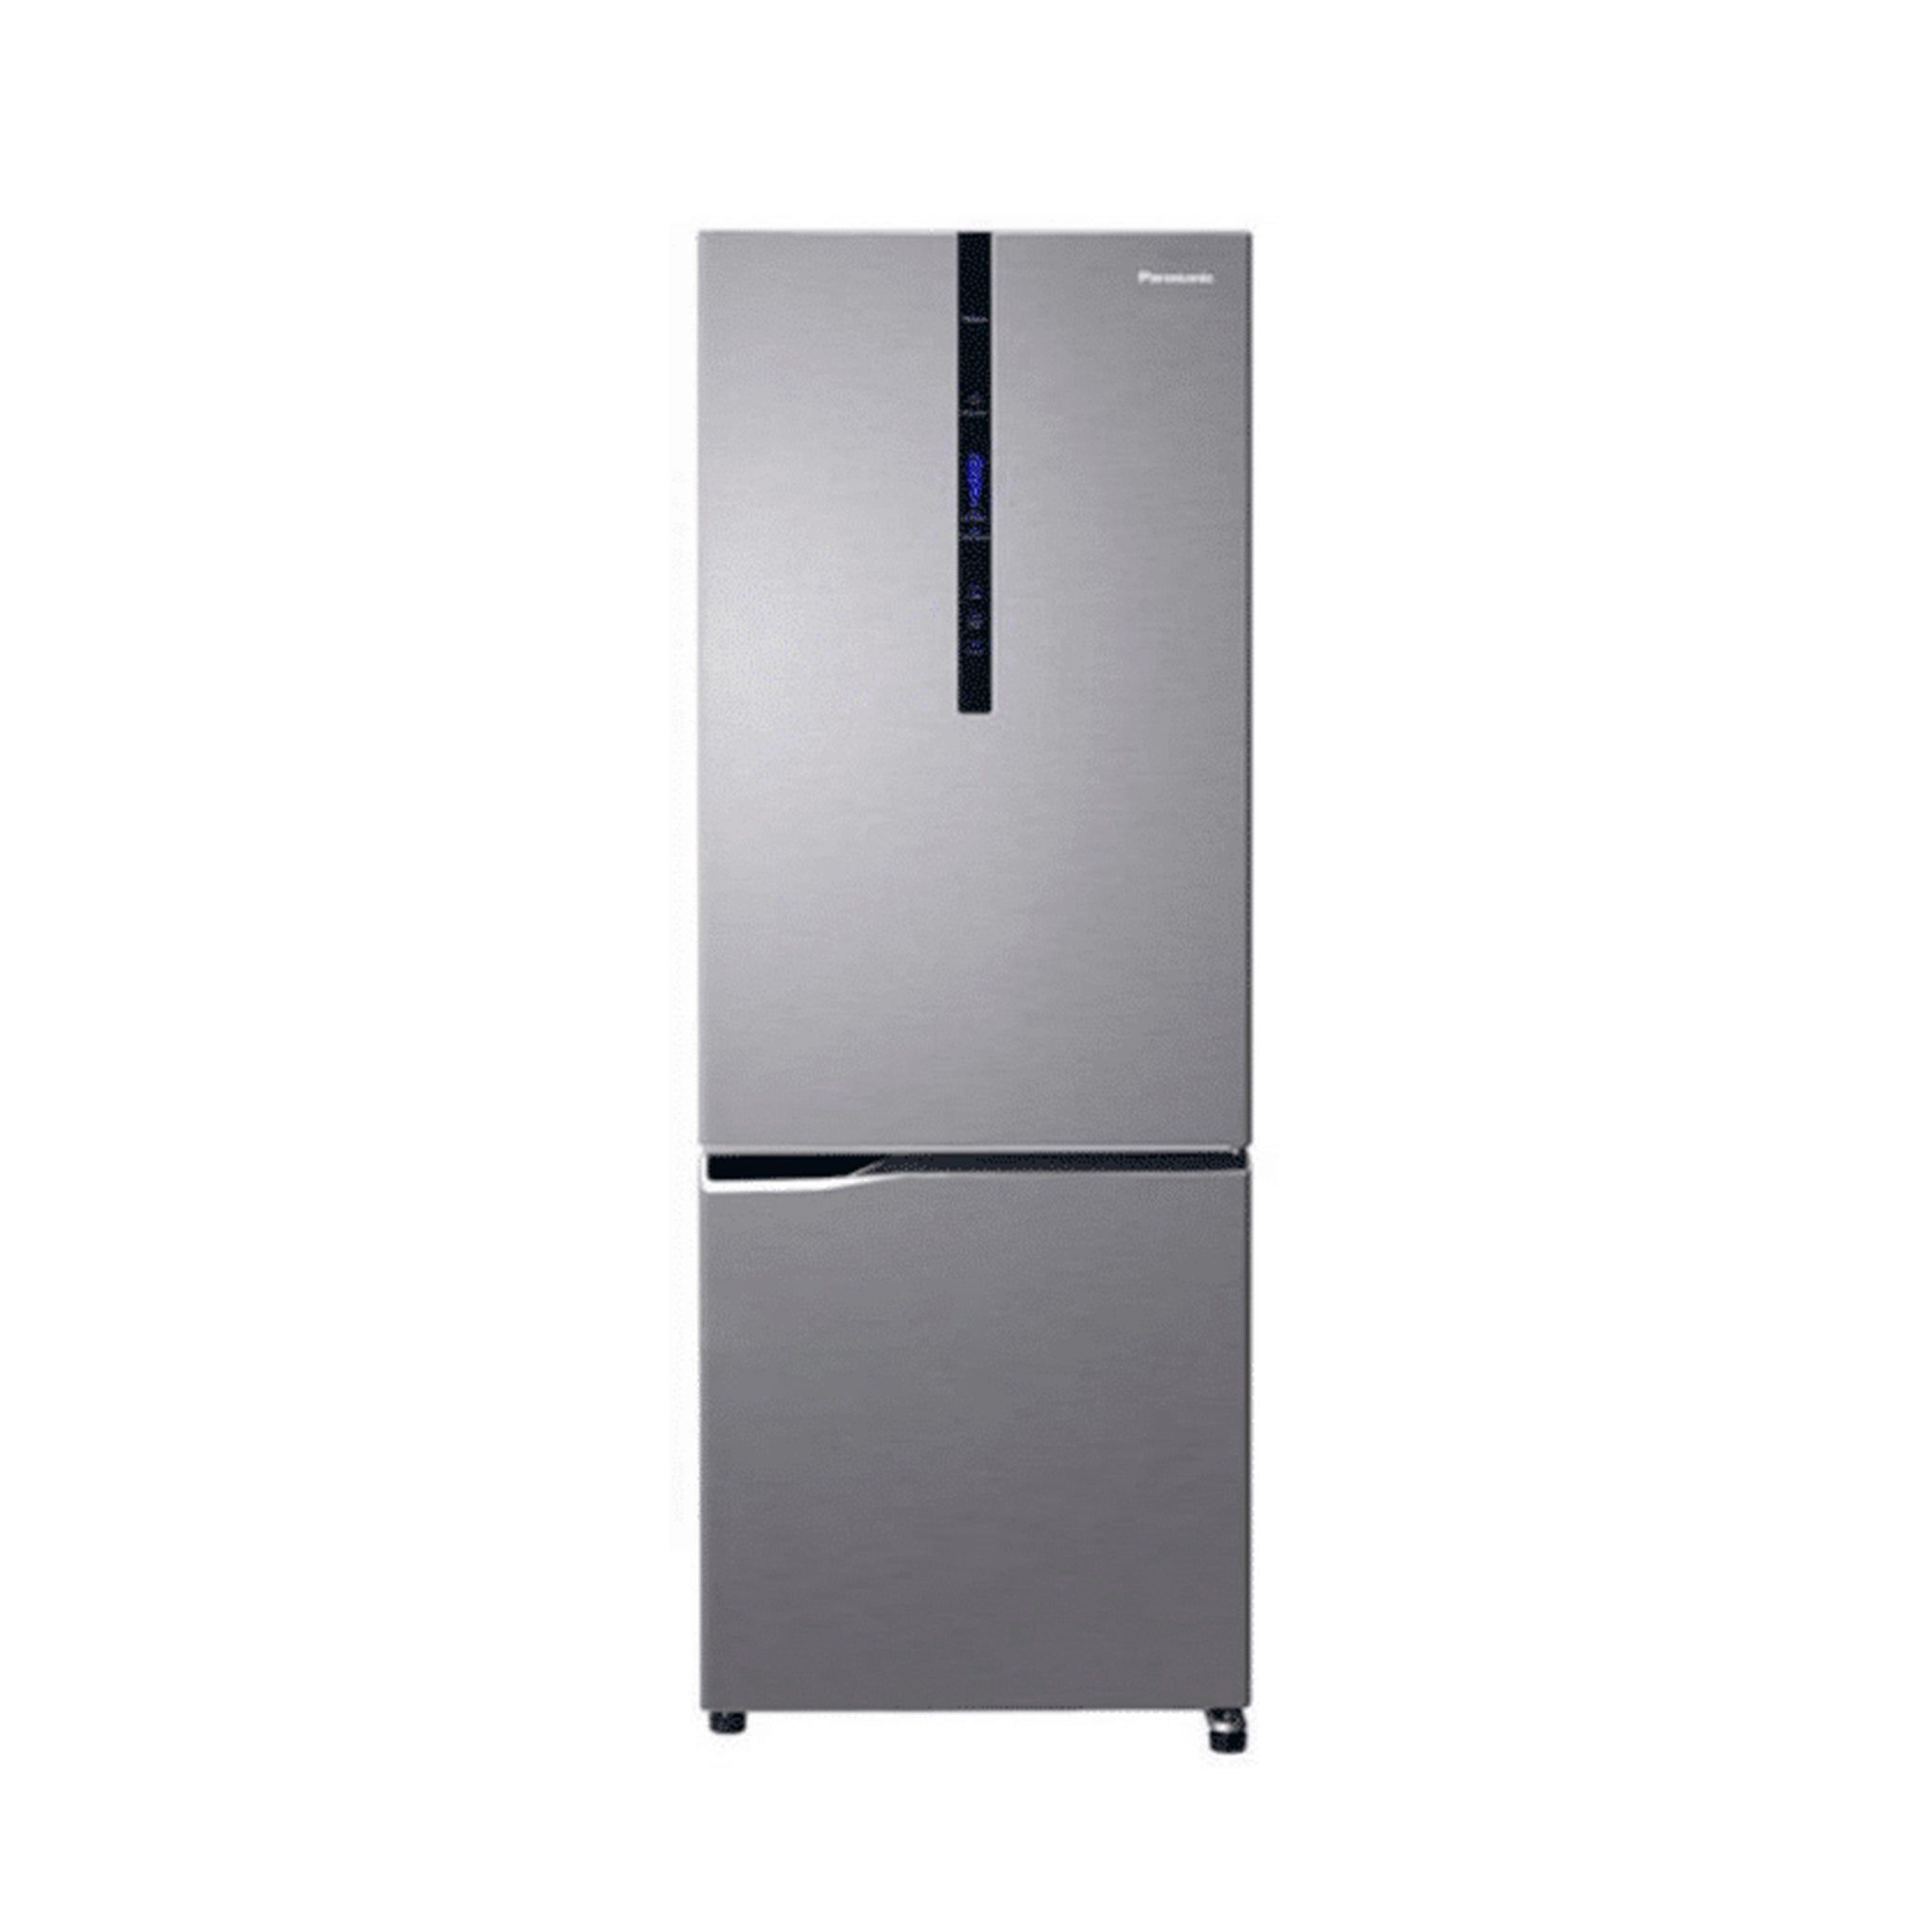 PANASONIC NR-BVXSPH 2-Door Bottom Freezer Refrigerator